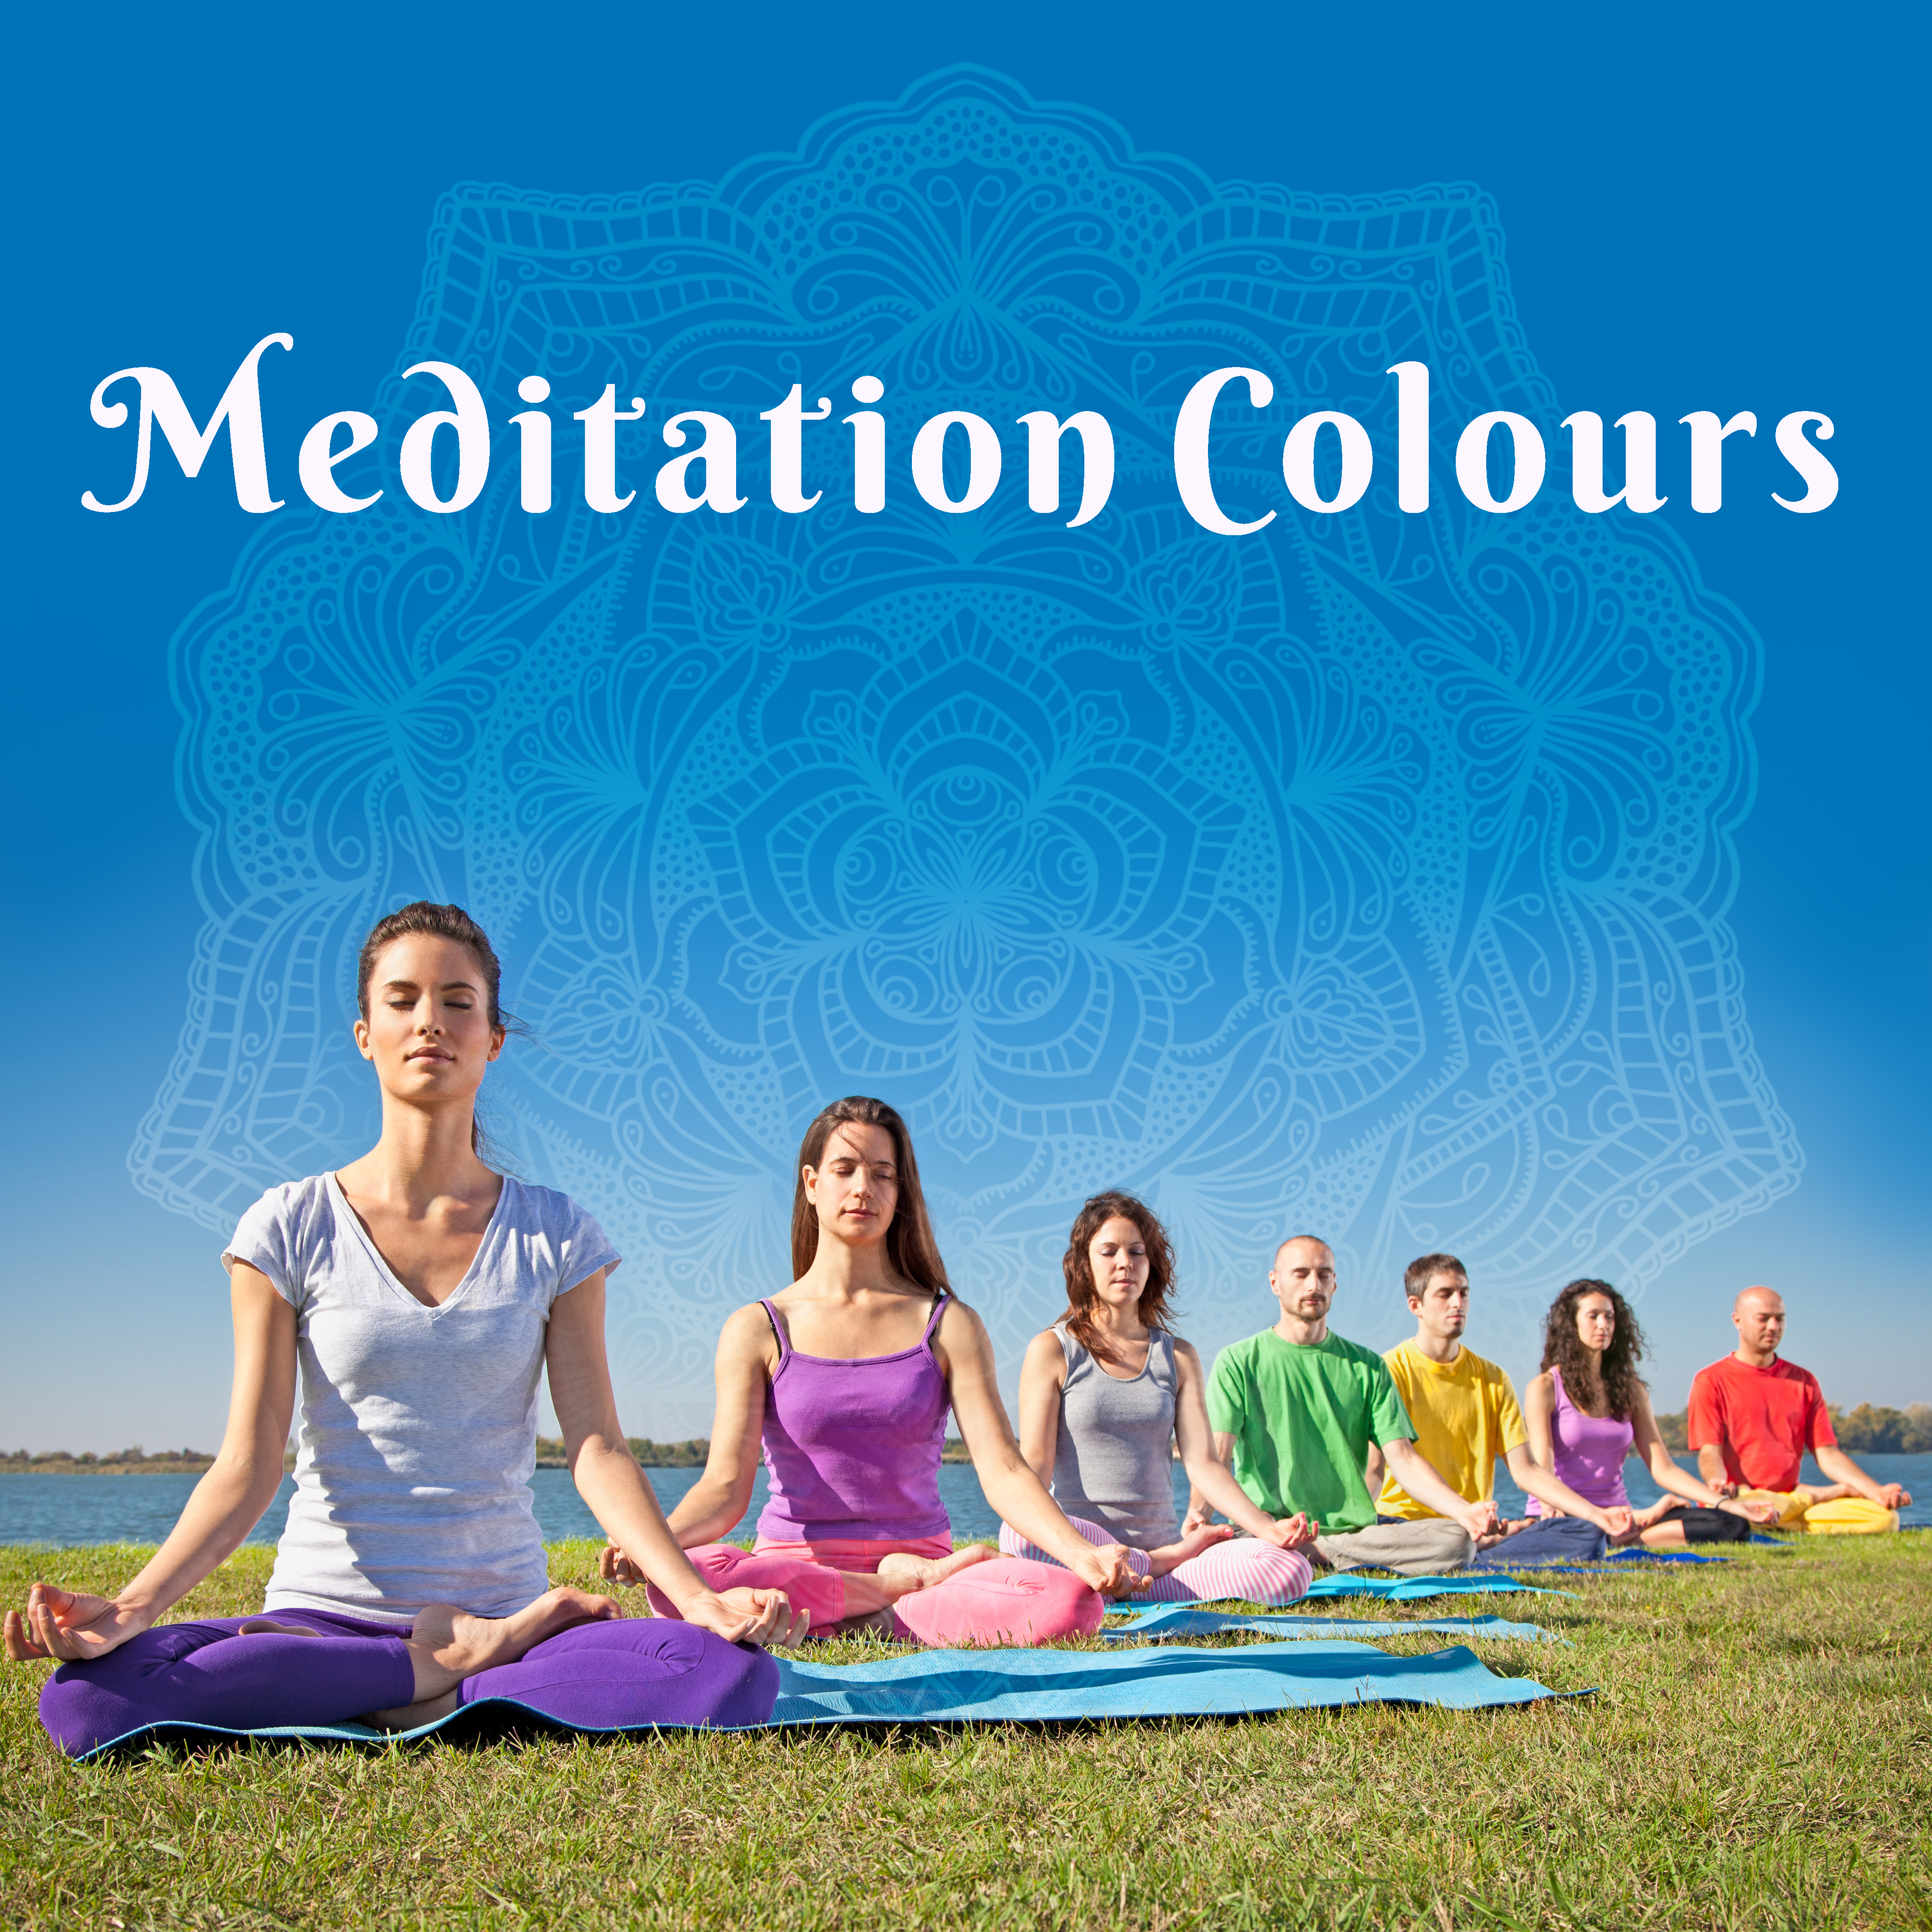 Meditation Colours